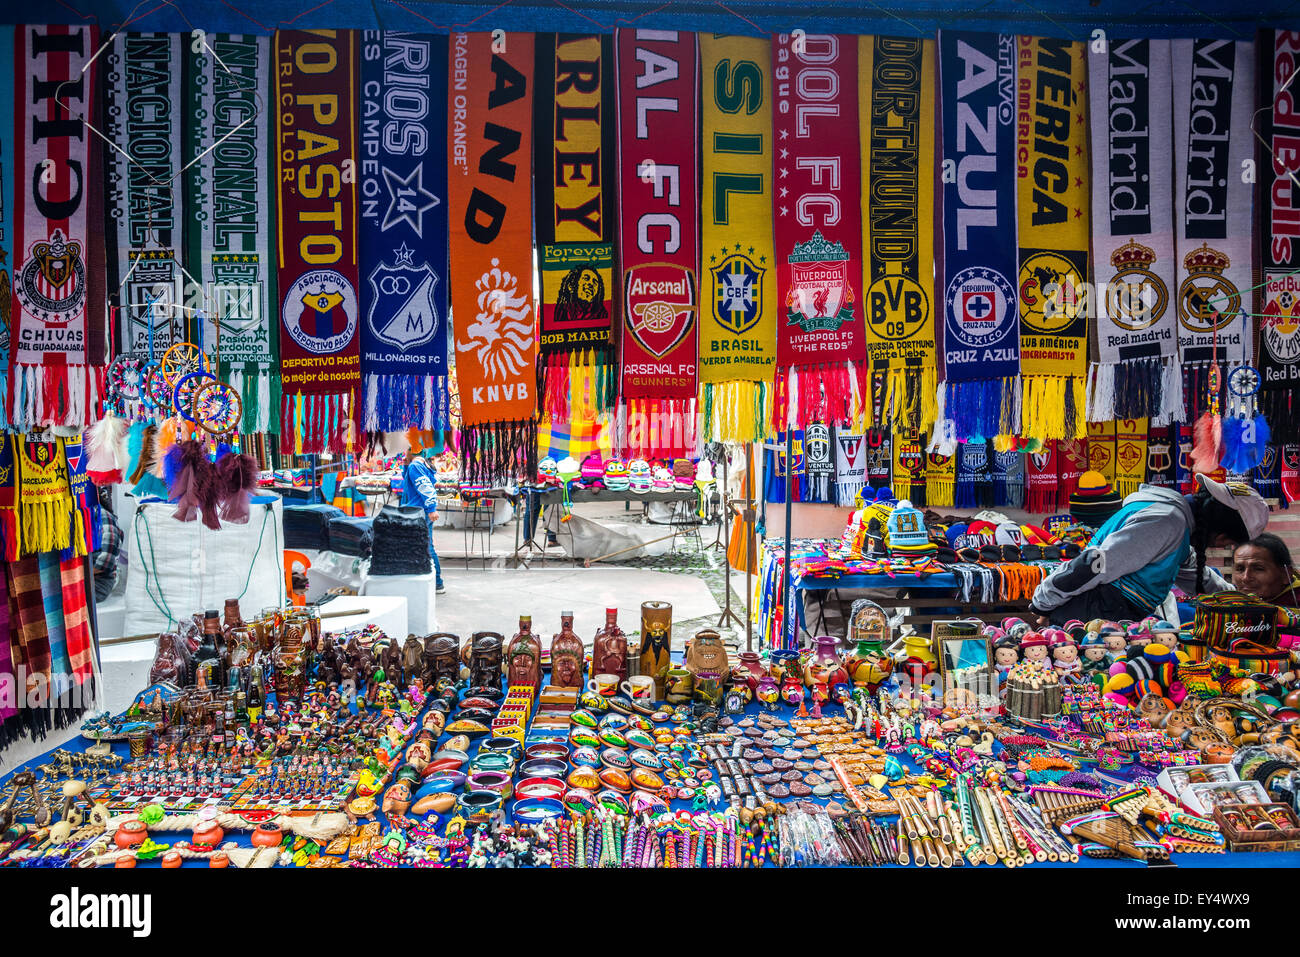 Coloridos carteles de famosos equipos de fútbol a la venta en un stand. Foto de stock